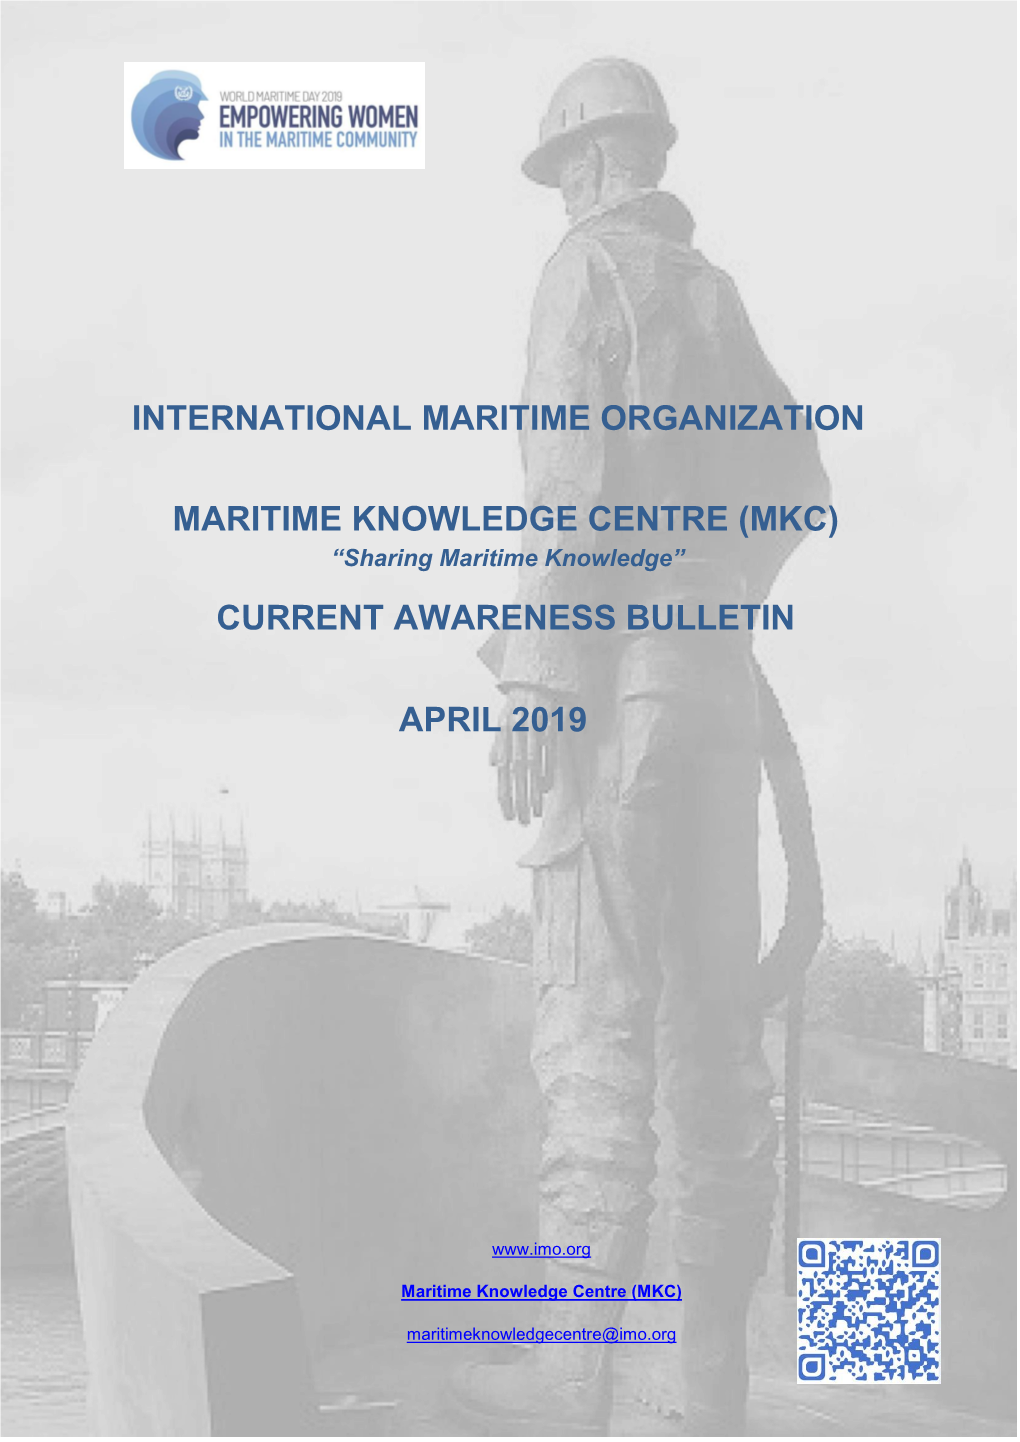 International Maritime Organization Maritime Knowledge Centre (Mkc) Current Awareness Bulletin April 2019